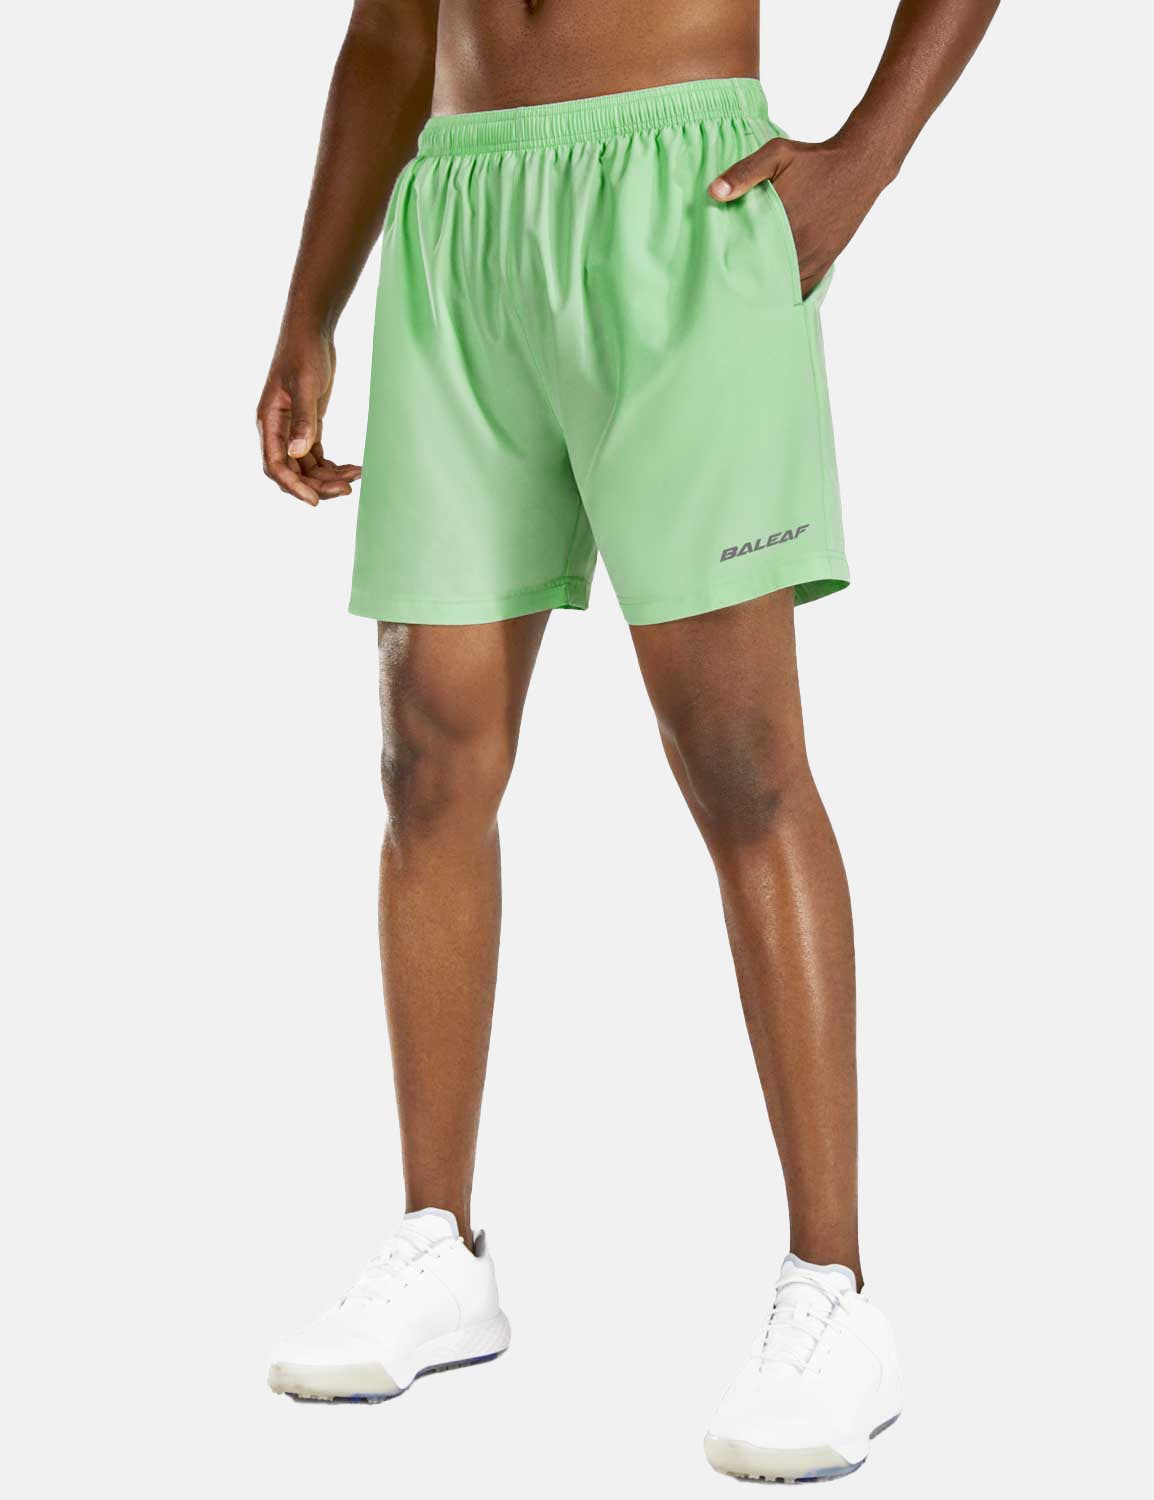 Baleaf Men's 5'' Light-Weight Quick Dry Fully Lined Shorts abd215 Light Green Main